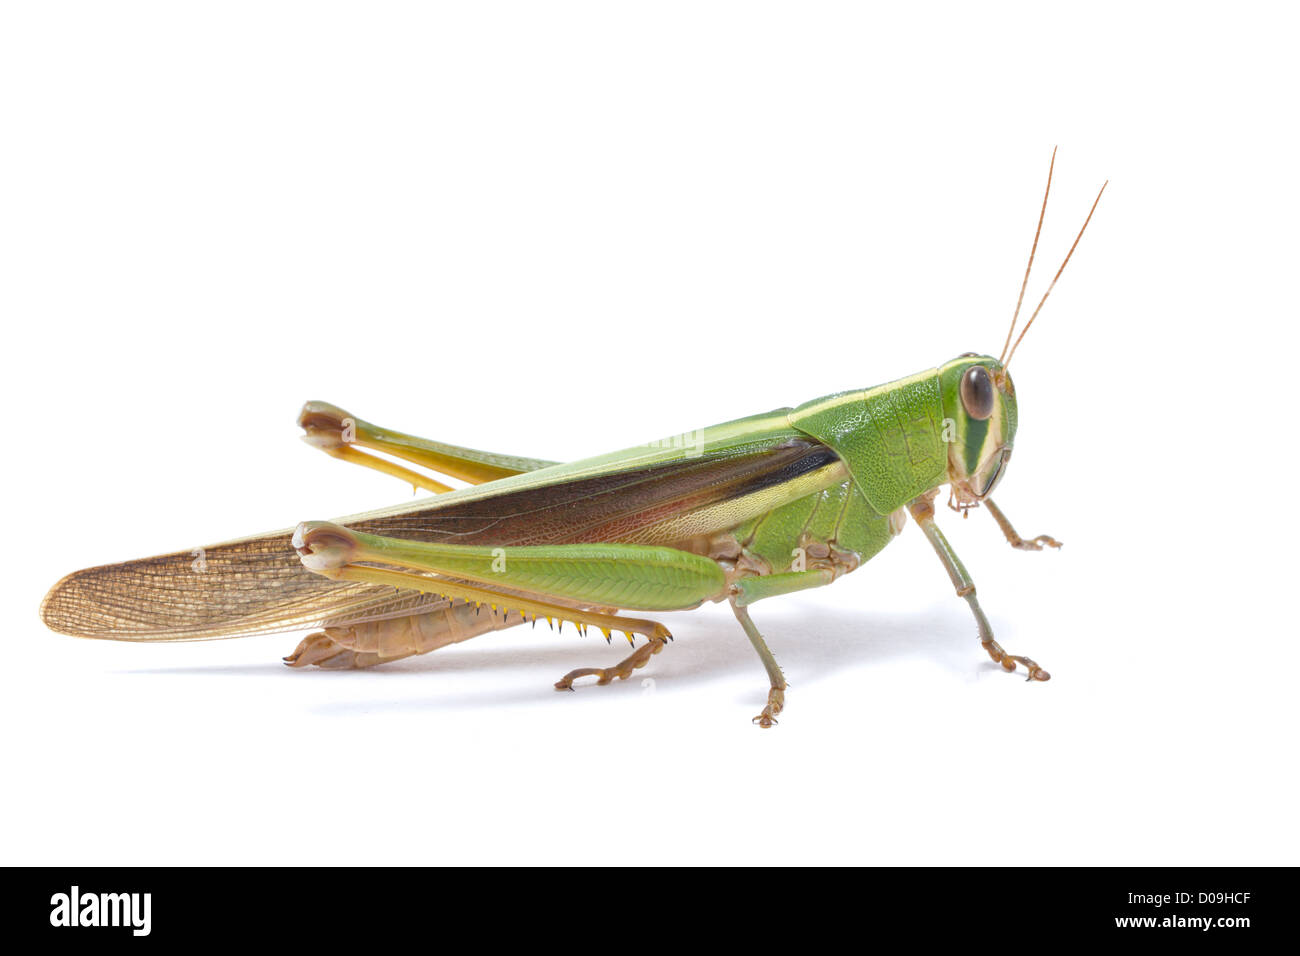 Grasshopper isolated on white background. Stock Photo